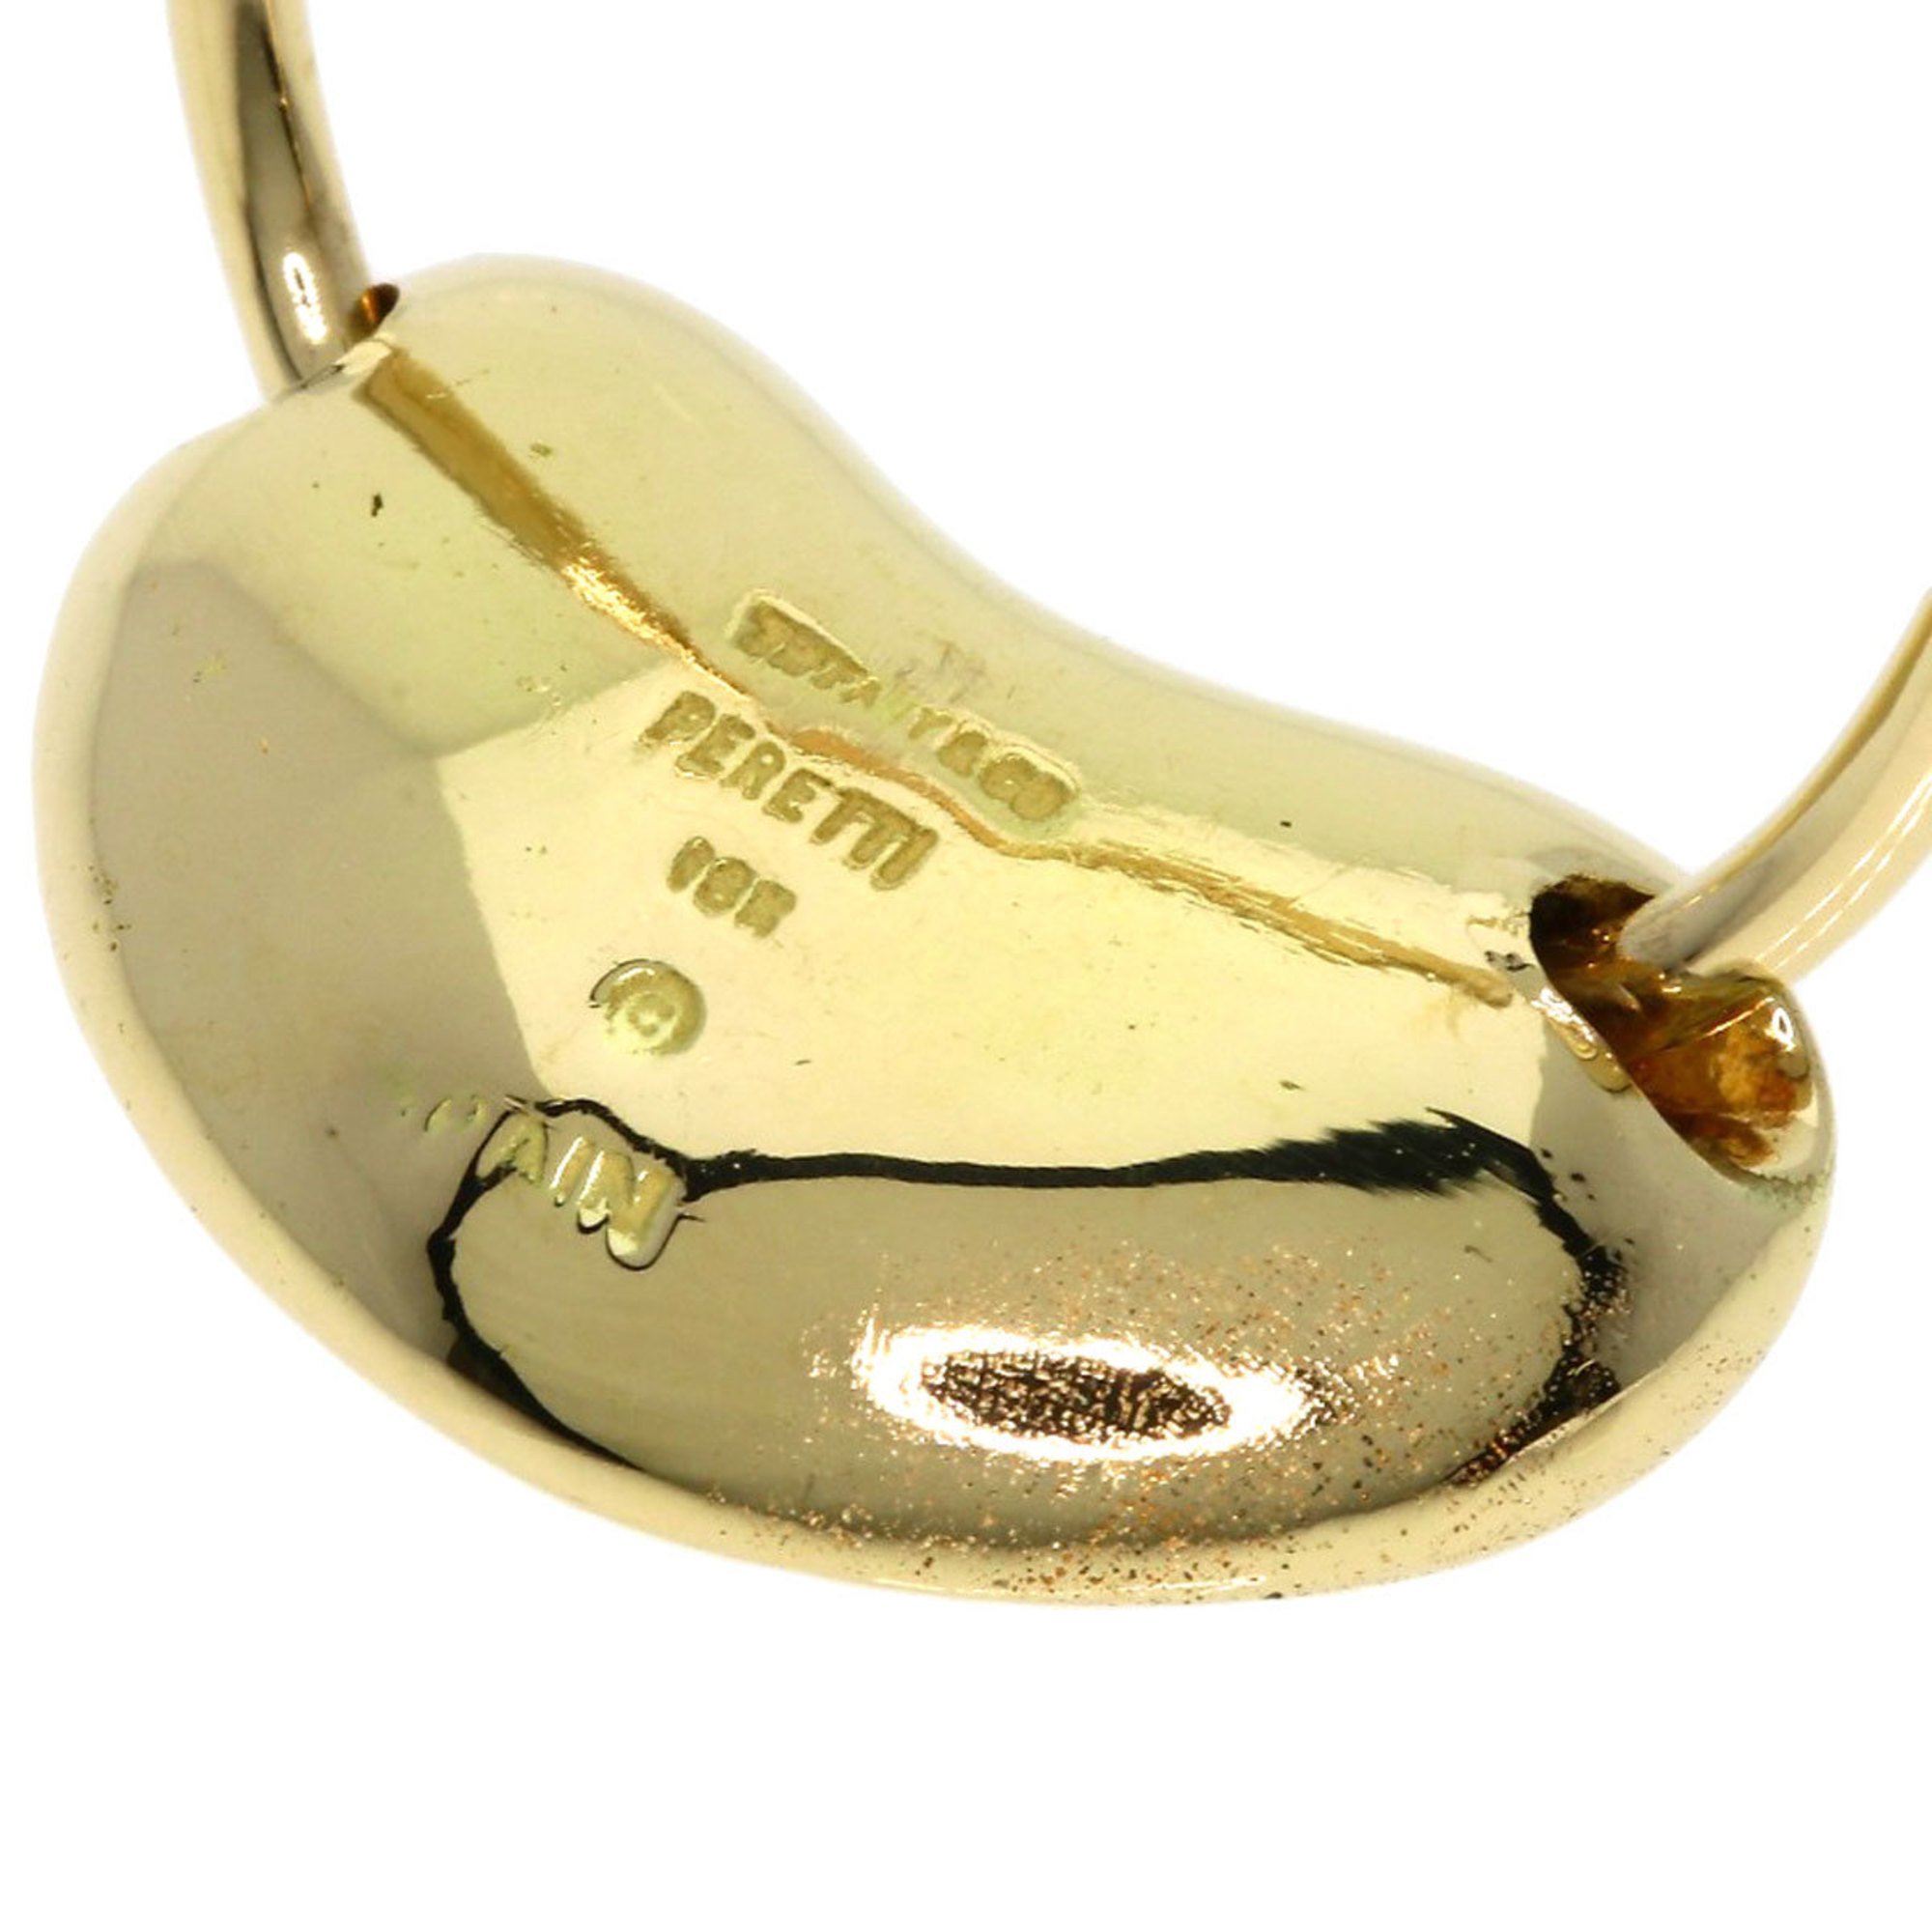 Tiffany Bean Ring, 18K Yellow Gold, Women's